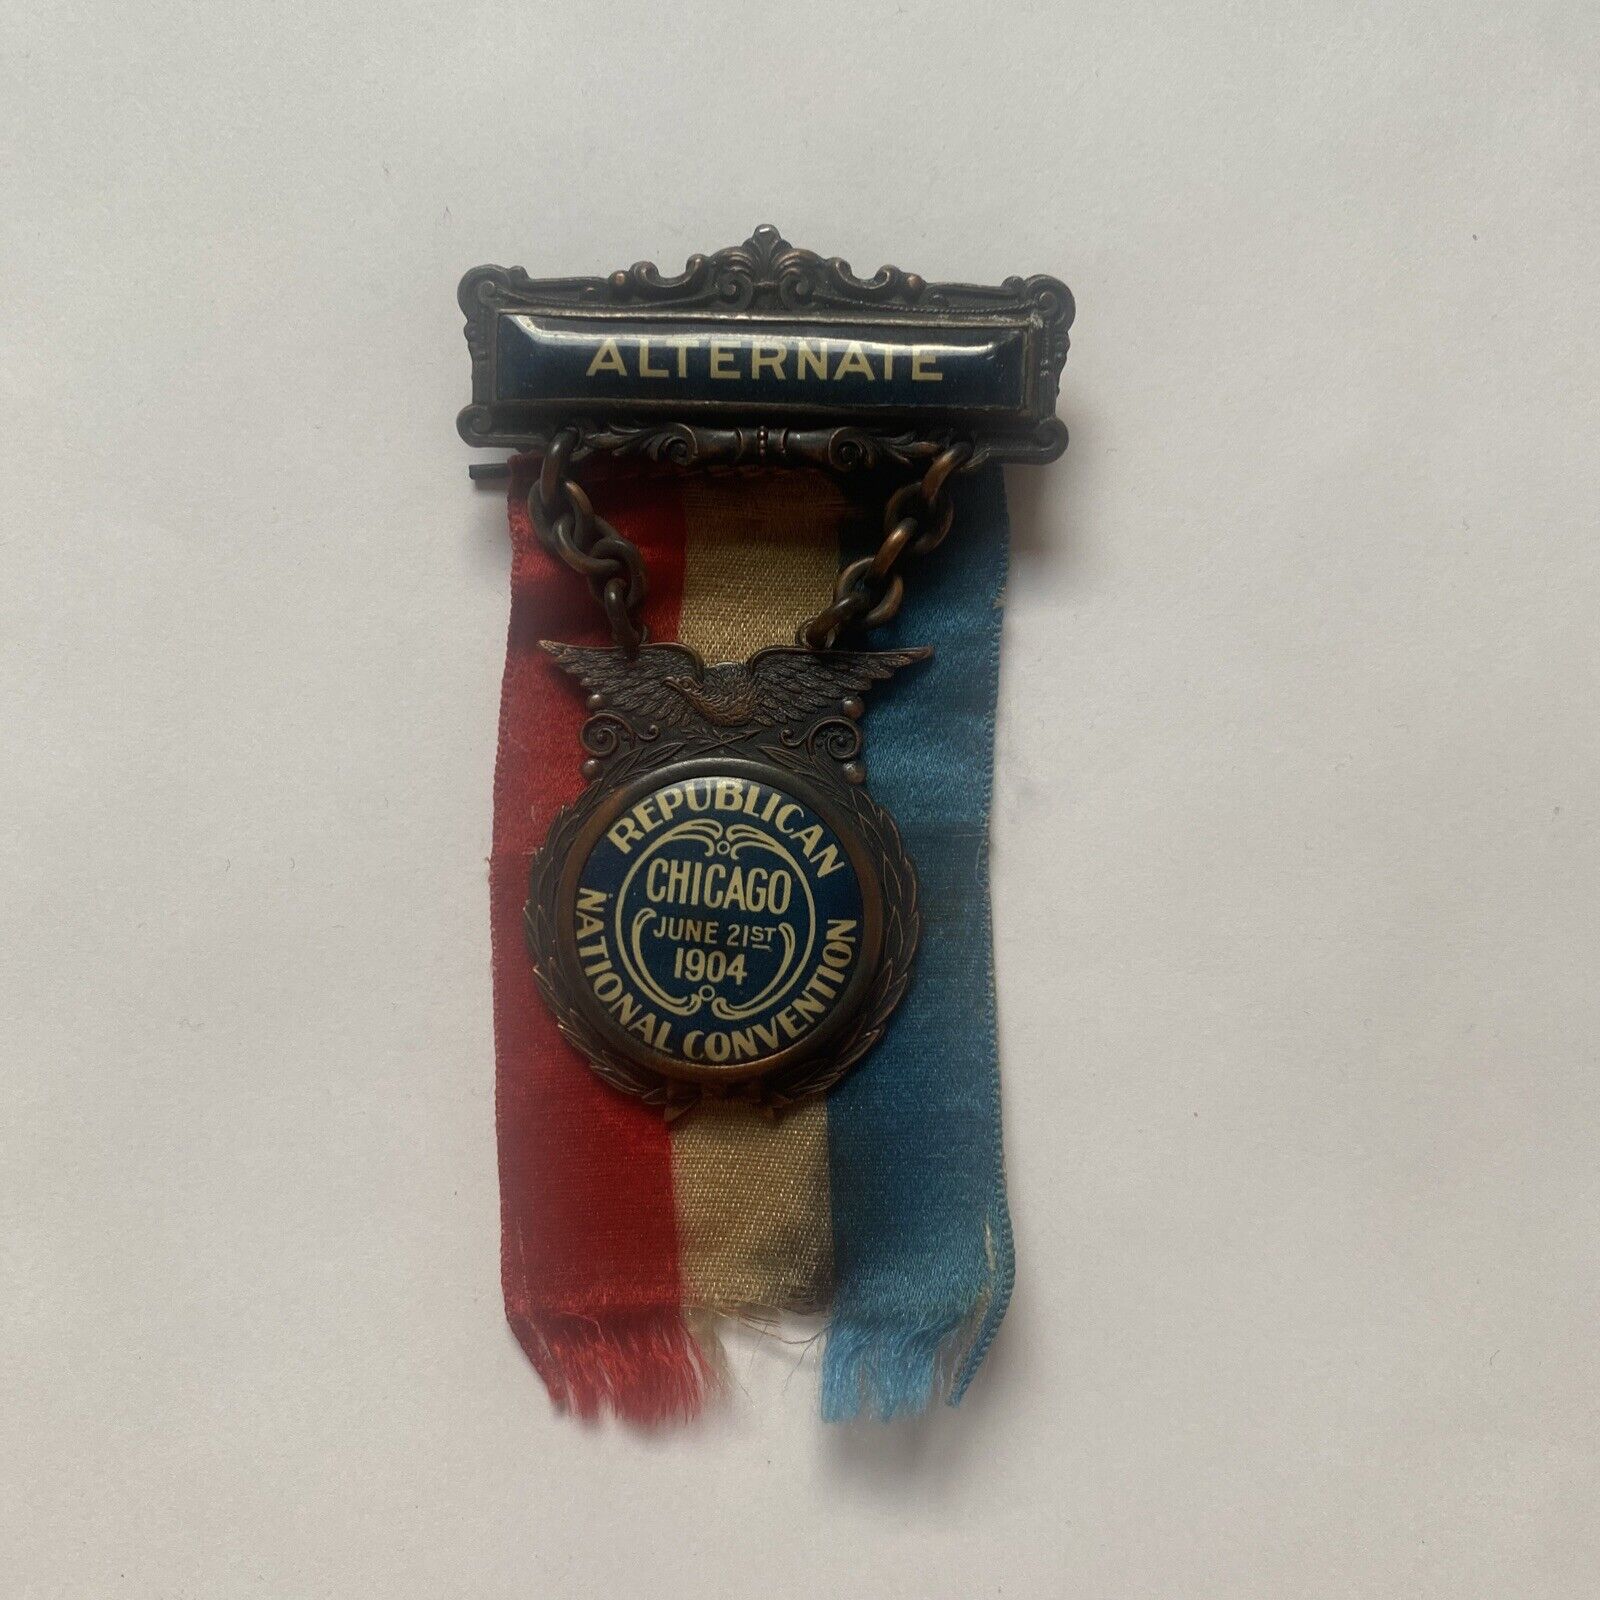 1904 Republican National Convention Theodore Roosevelt Alternate Delegate Badge